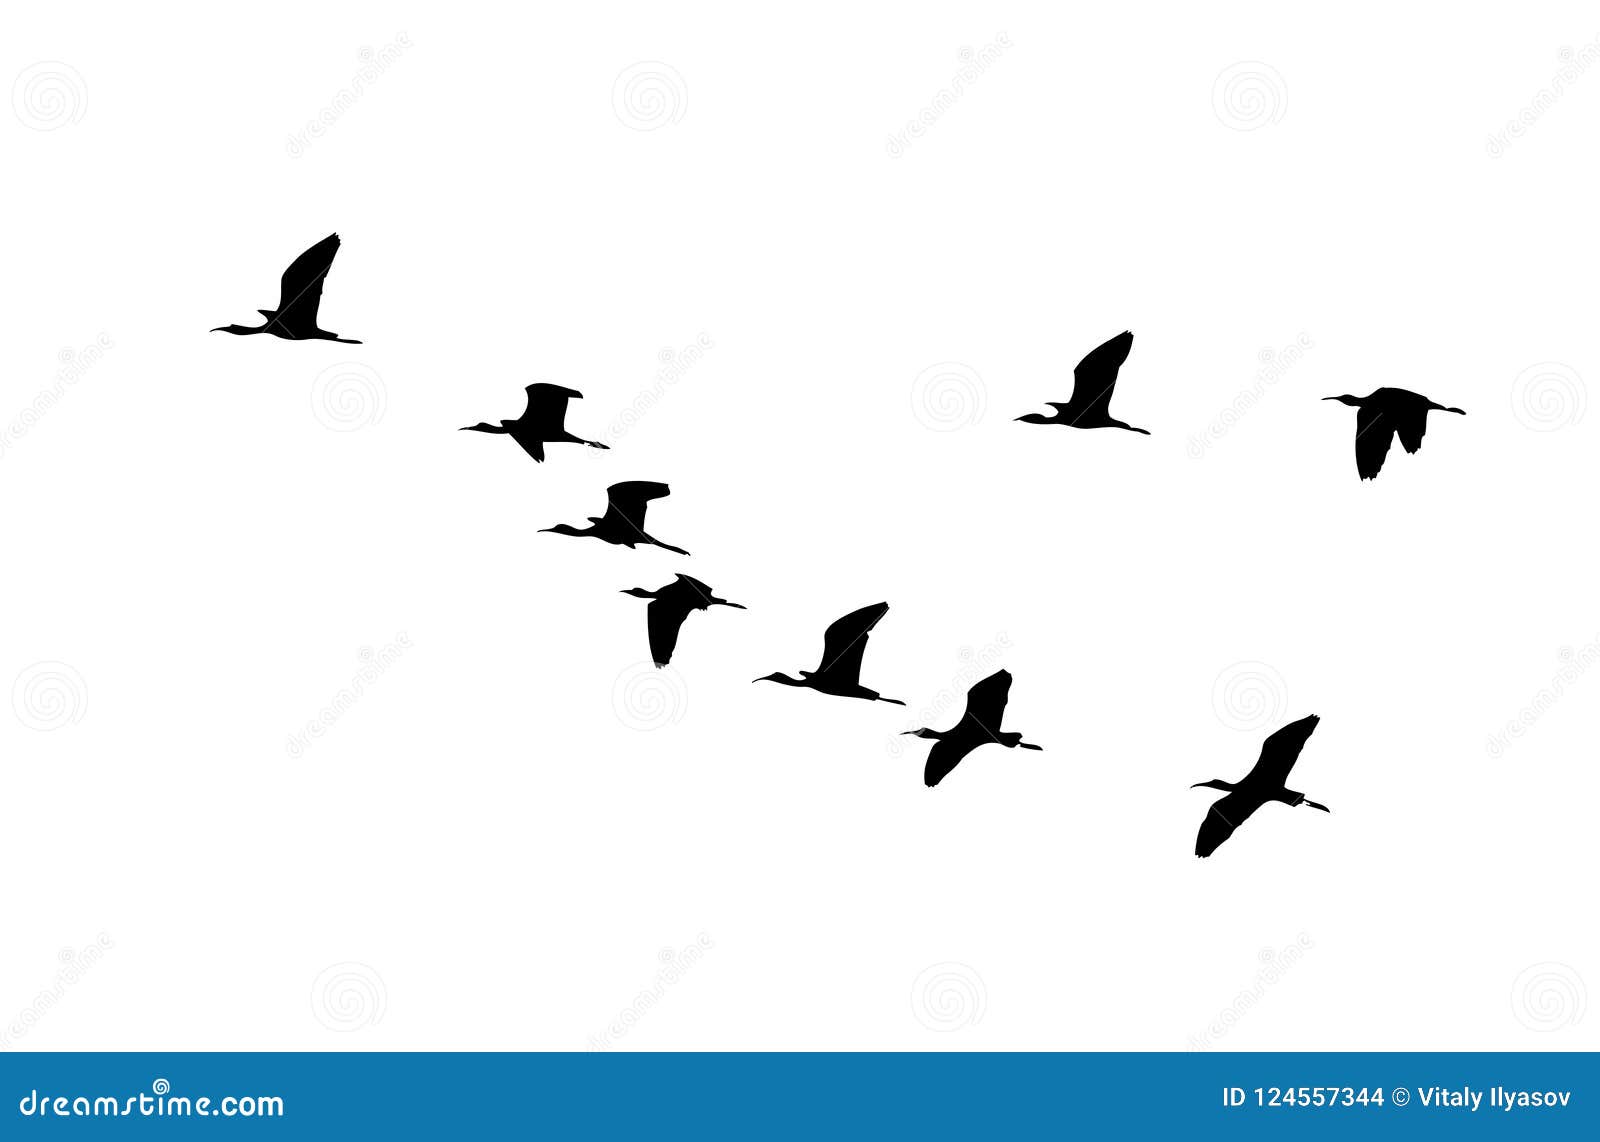 glossy ibis wedge in flight.  silhouette a flock of birds